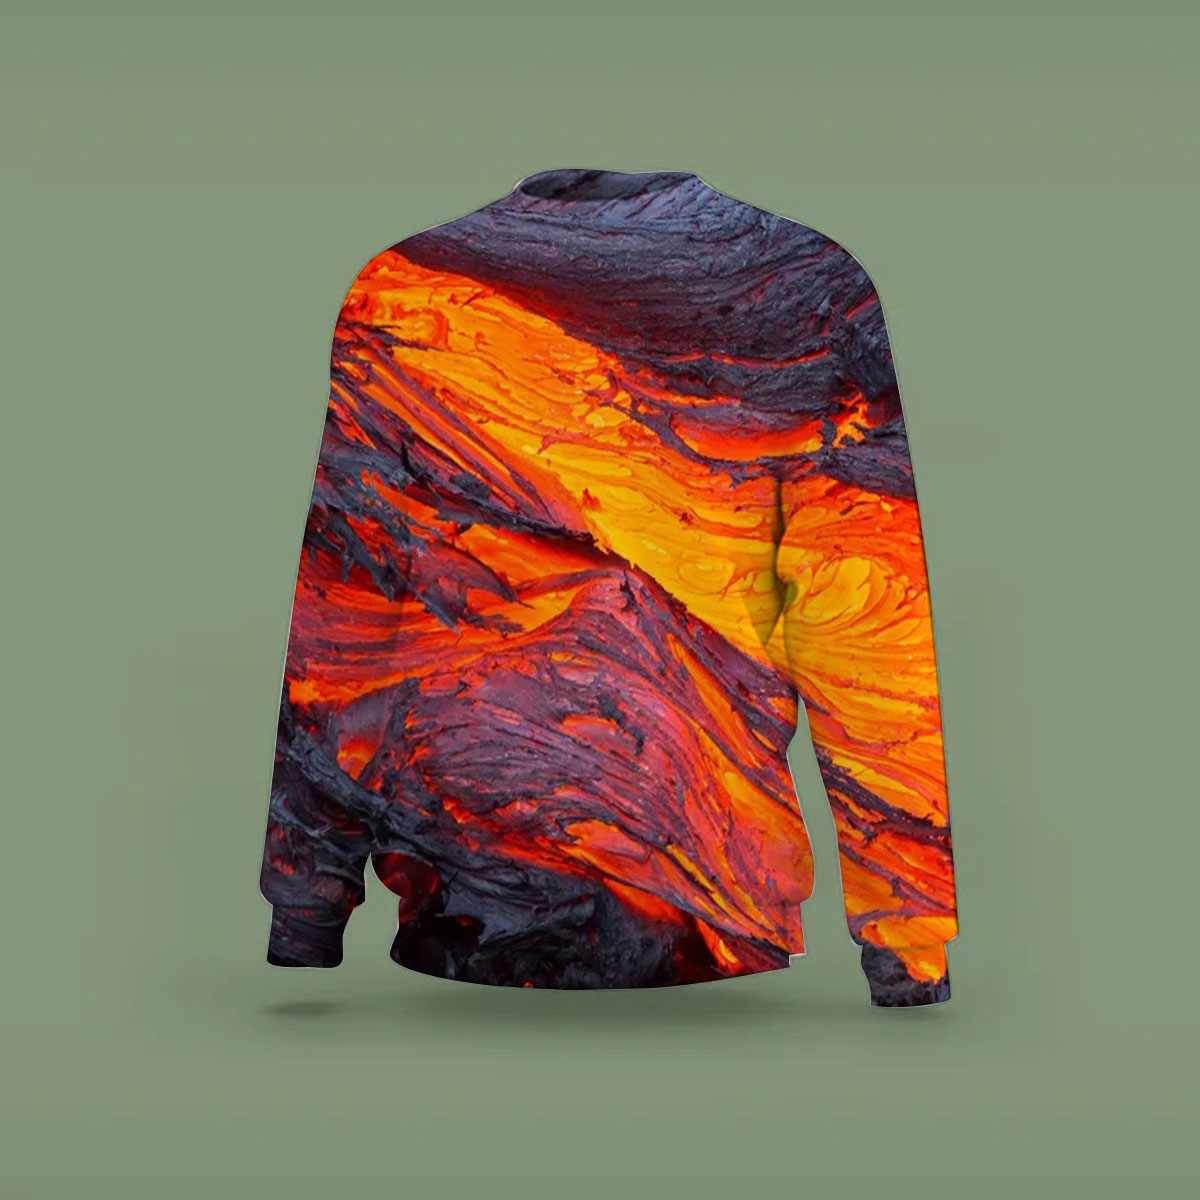 Volcano Mountain Sweatshirt